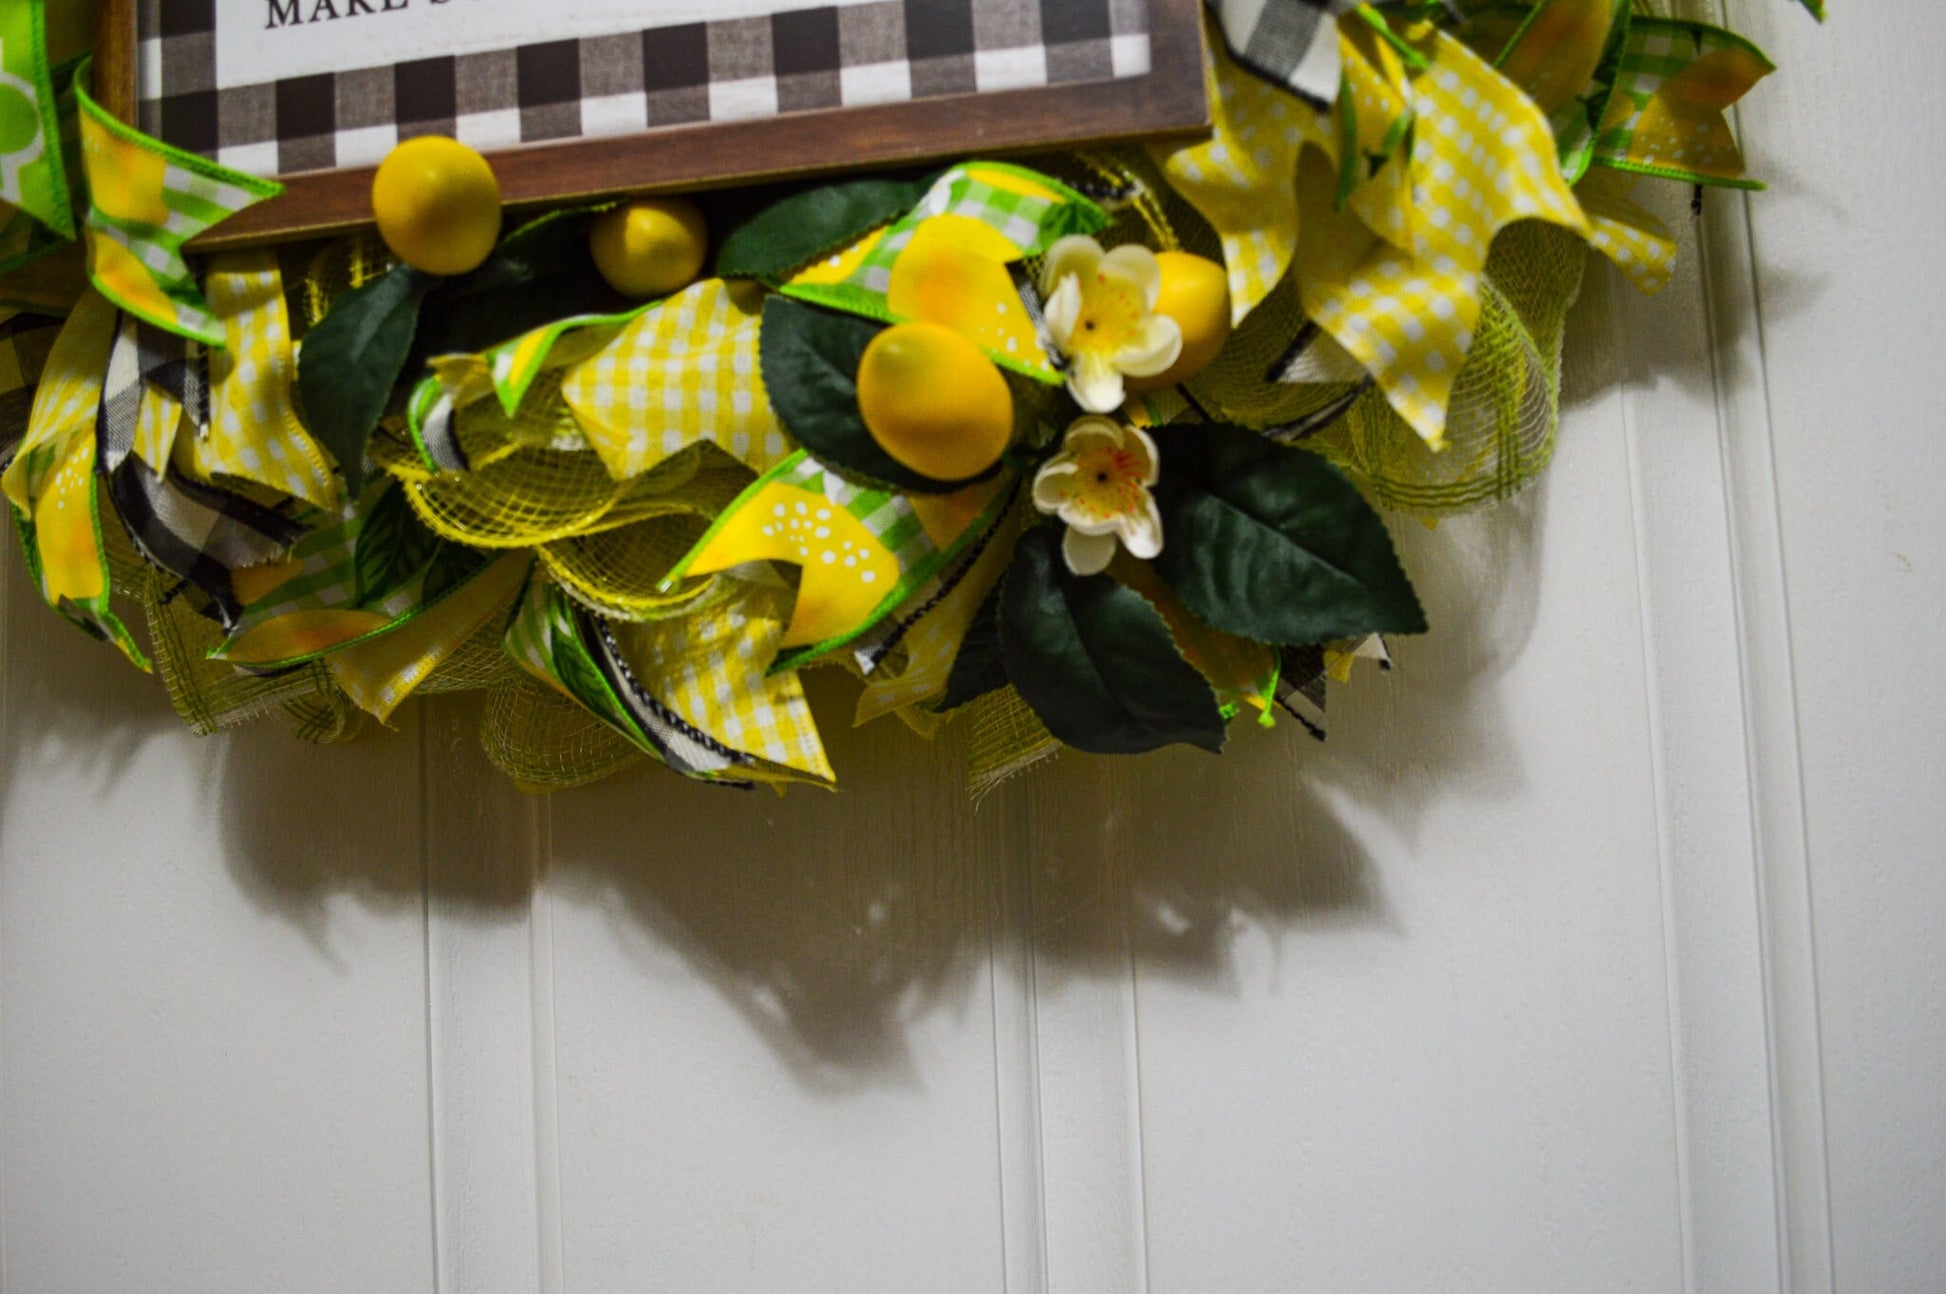 Lemon Wreath for Front Door, Lemon Kitchen Decor, Yellow Green Lemonade Door Hanger, Lemon Porch Decor, Summer Lemonade Wreath,